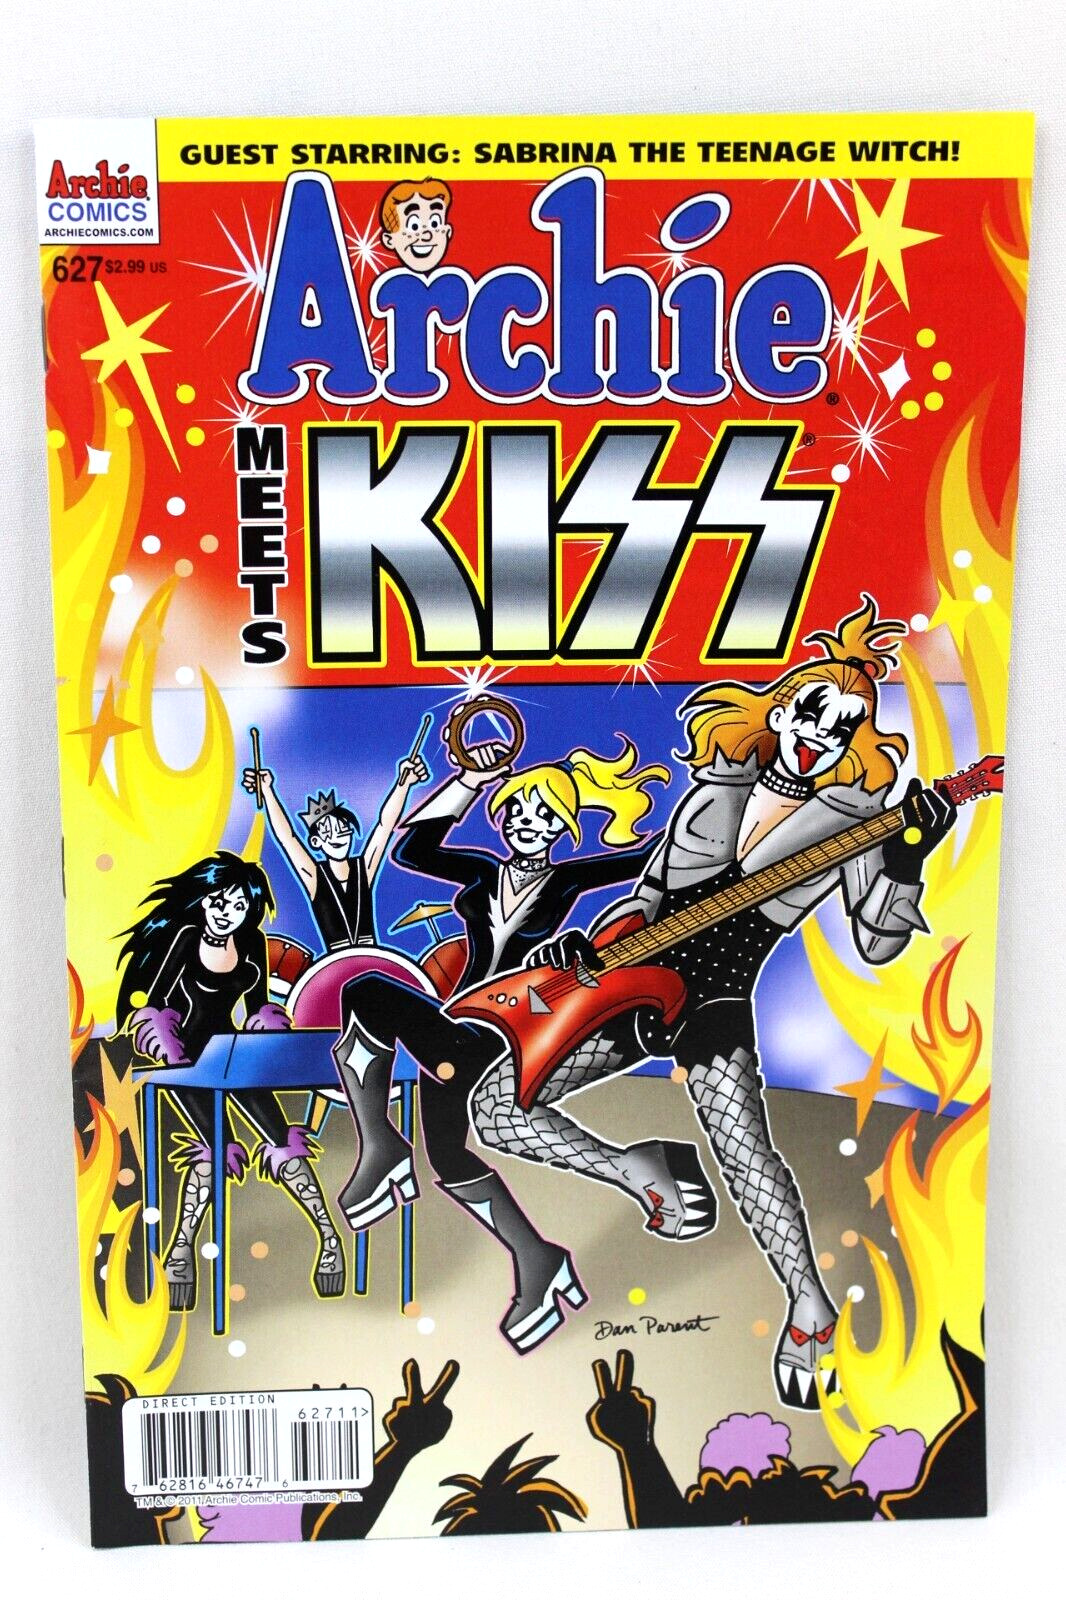 Archie Meets KISS #627 Sabrina Teenage Witch 2012 Archie Comics Comic Book F+